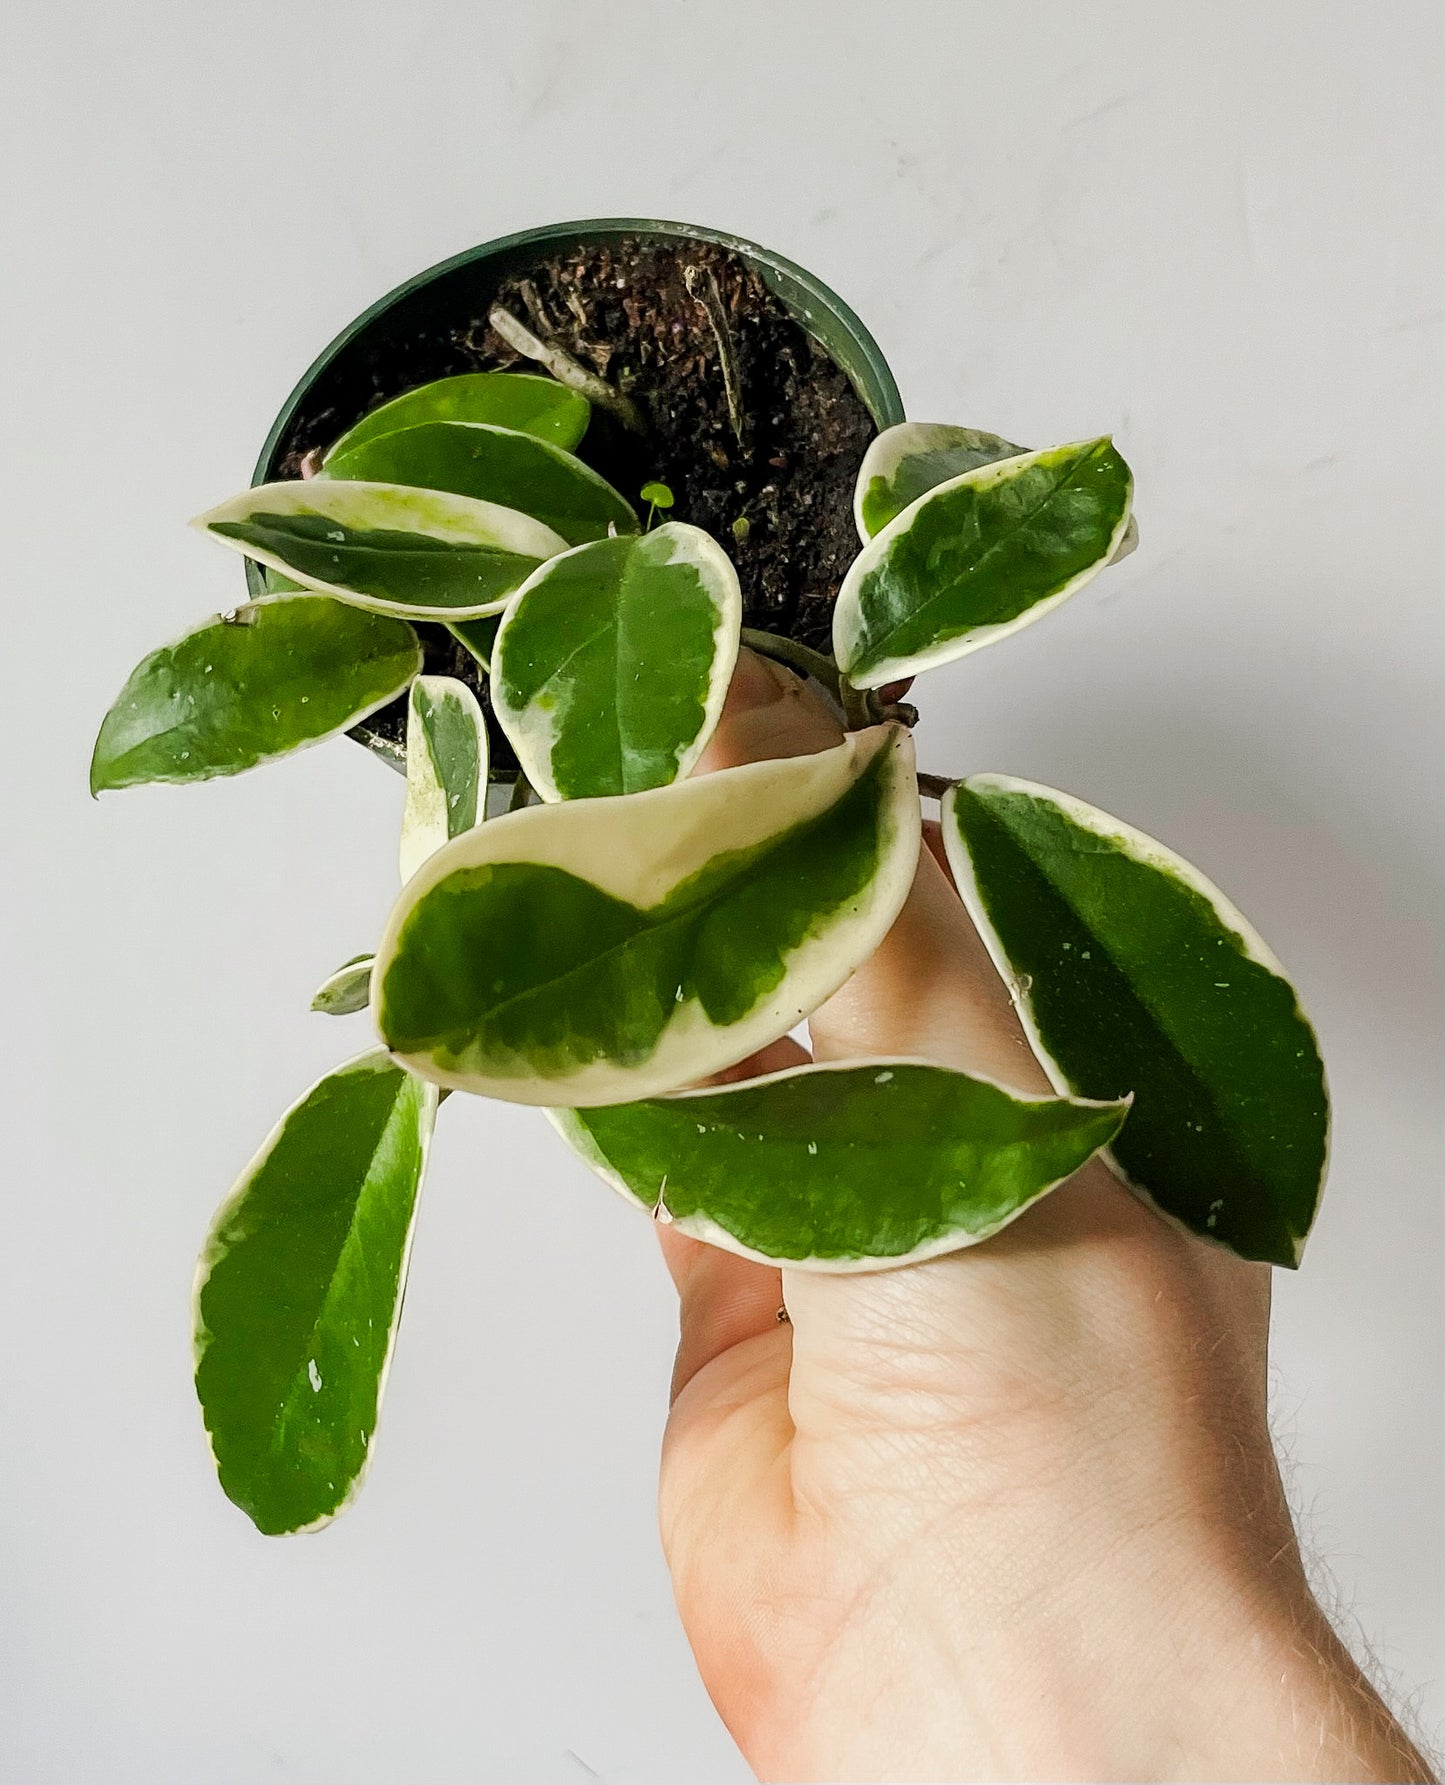 Hoya Carnosa 'Tricolor' - Easy Care, Flowering, Vining/Trailing (🐾 Pet Friendly) Plant- Tropical Houseplant (4" or 6" Pot)